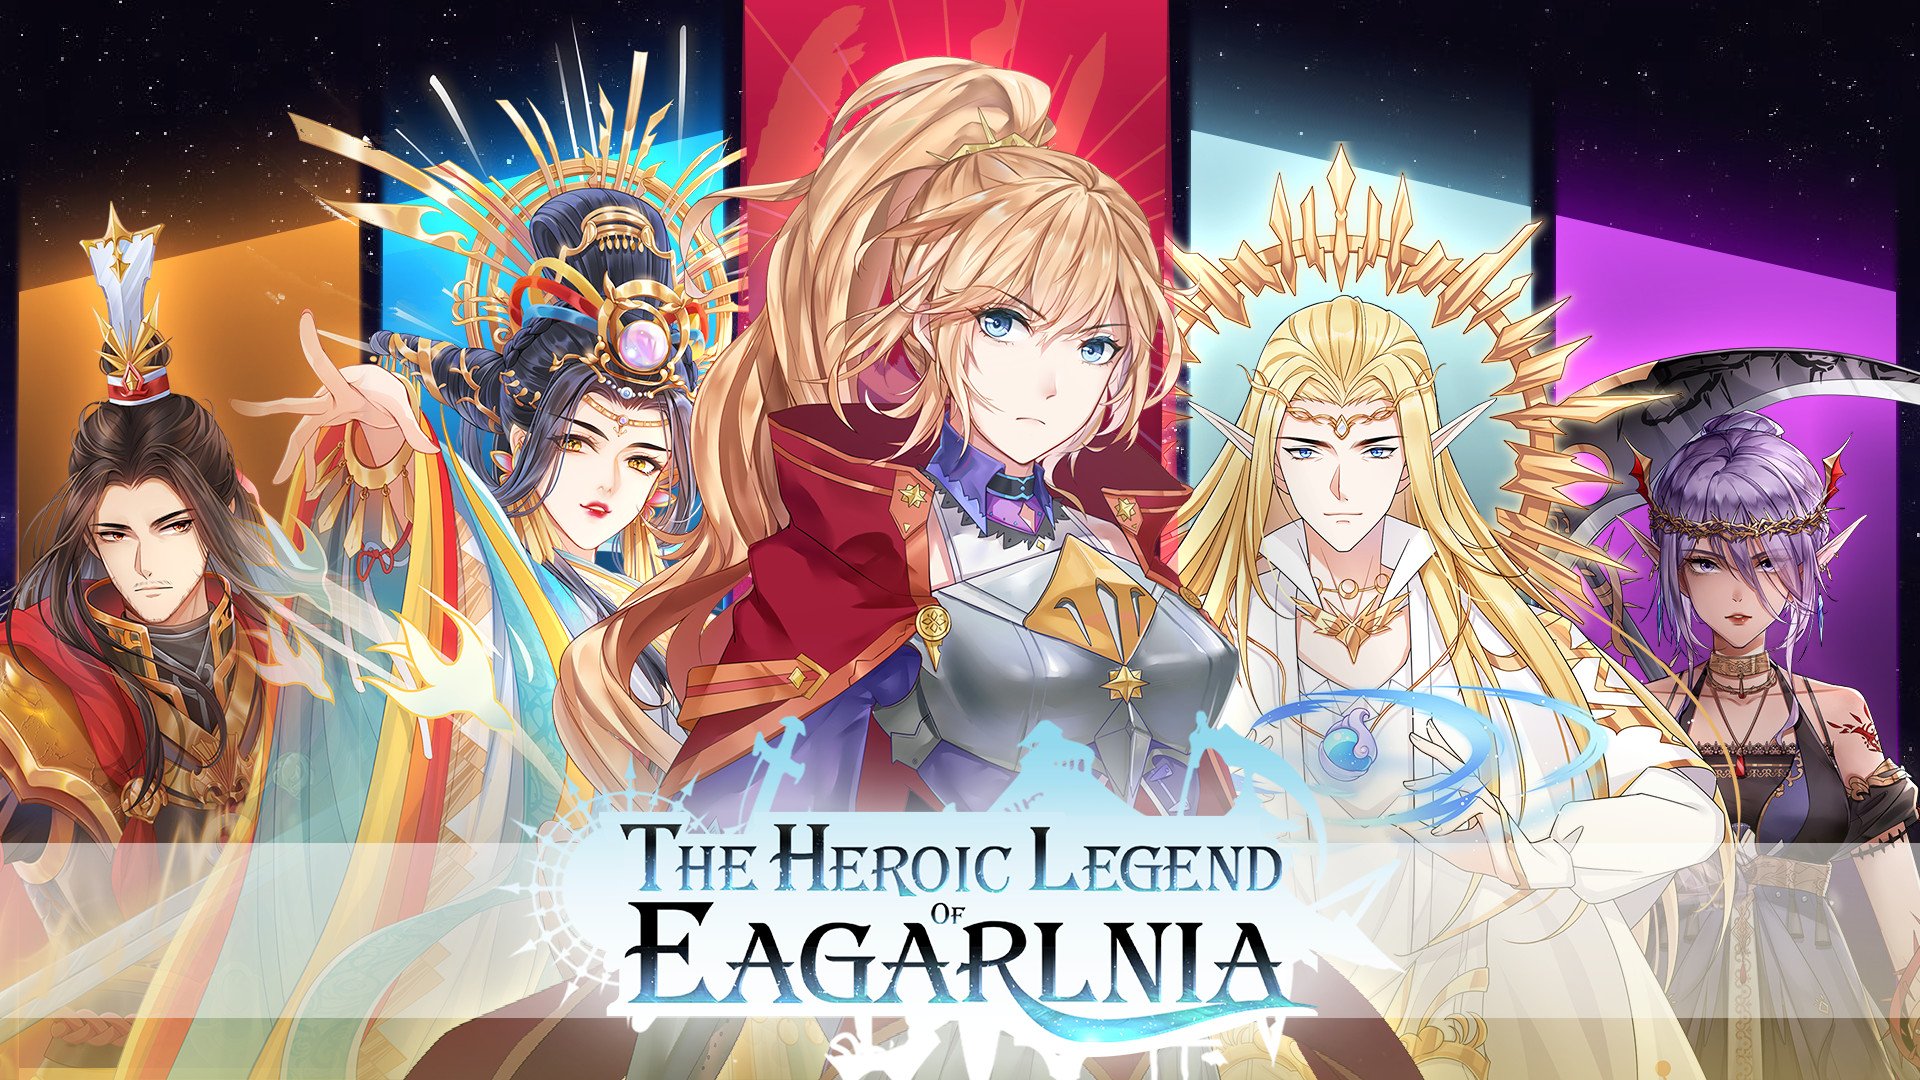 The Heroic Legend of Eagarlnia 1